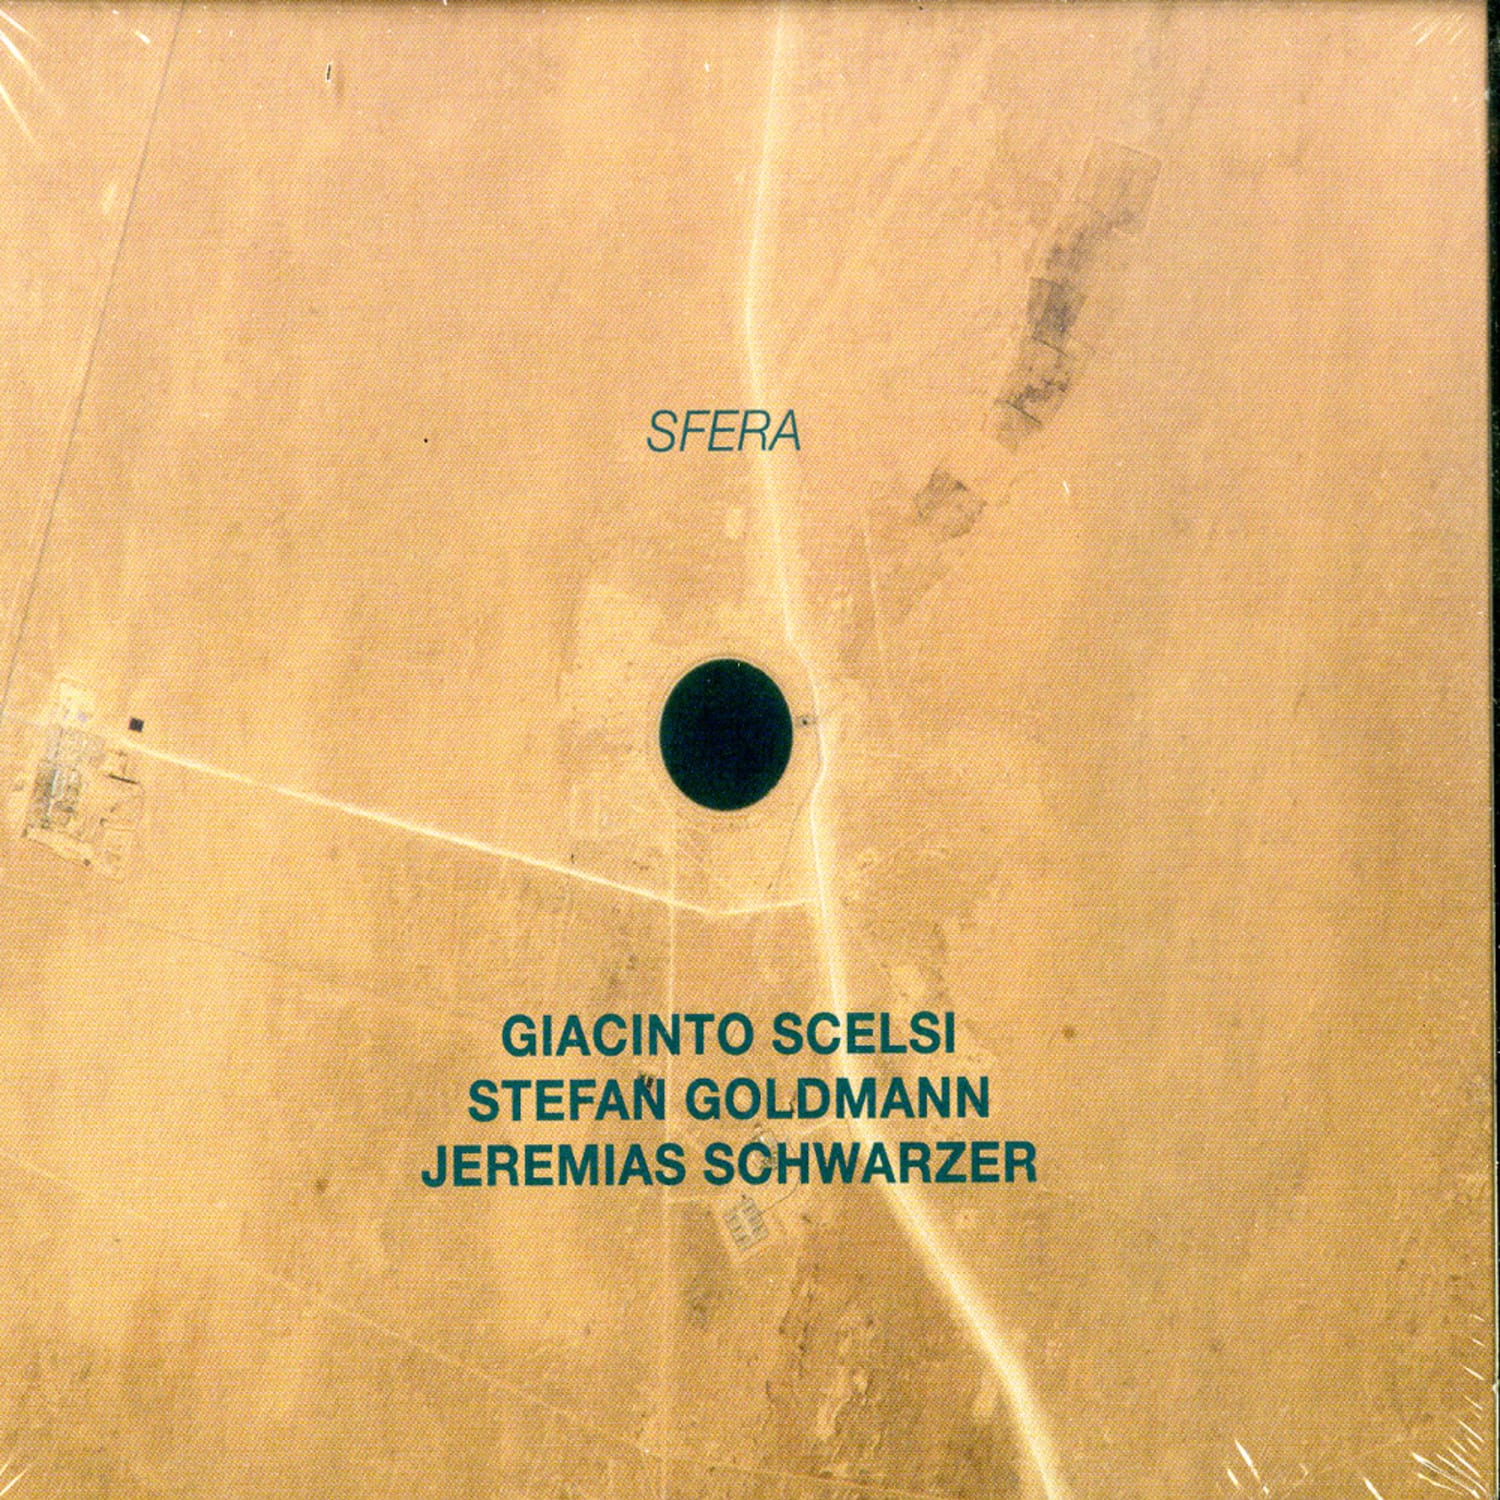 Giacinto Scelsi and Stefan Goldmann - JEREMIAS SCHWARZER SFERA 